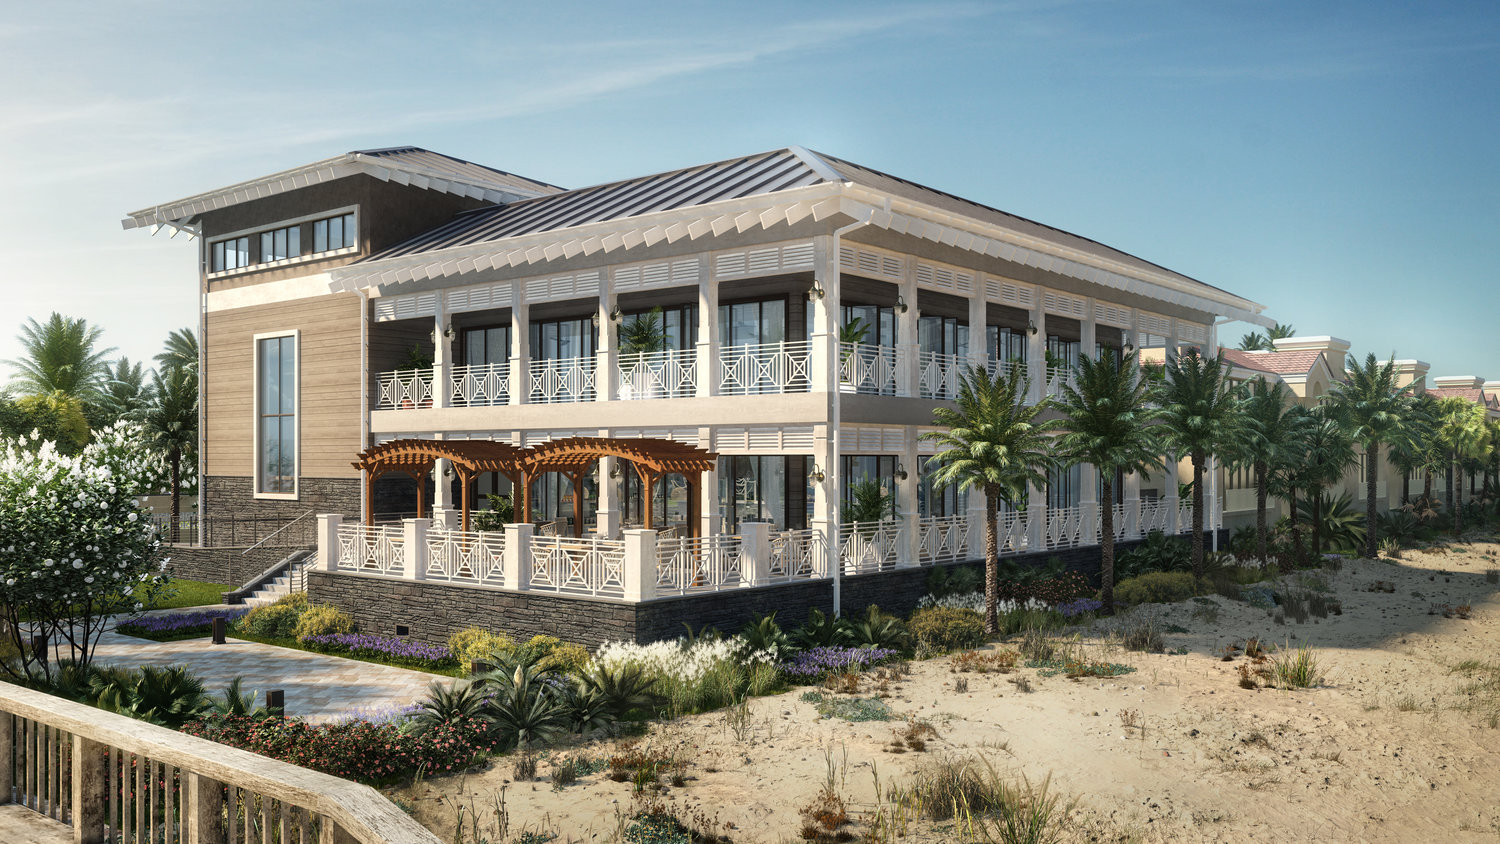 The Sawgrass Marriott Golf Resort & Spa is planning a new rooftop restaurant.